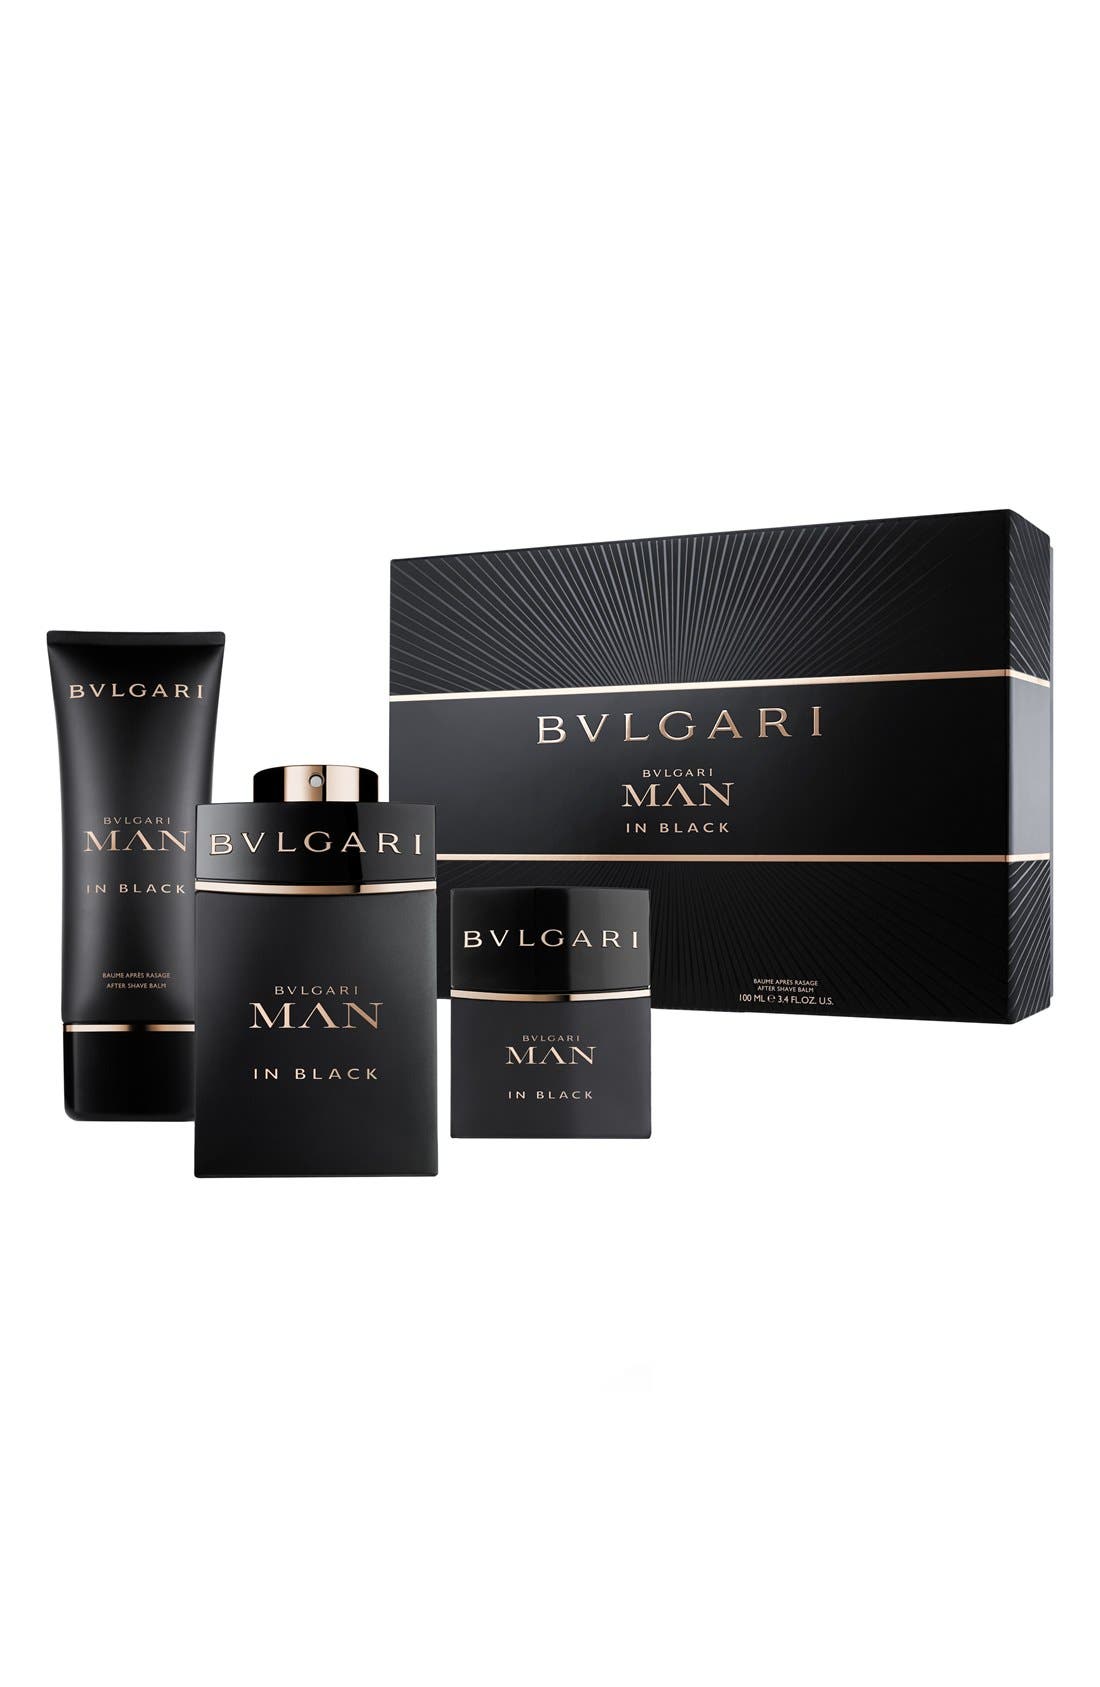 BVLGARI 'Man in Black' Set ($167 Value 